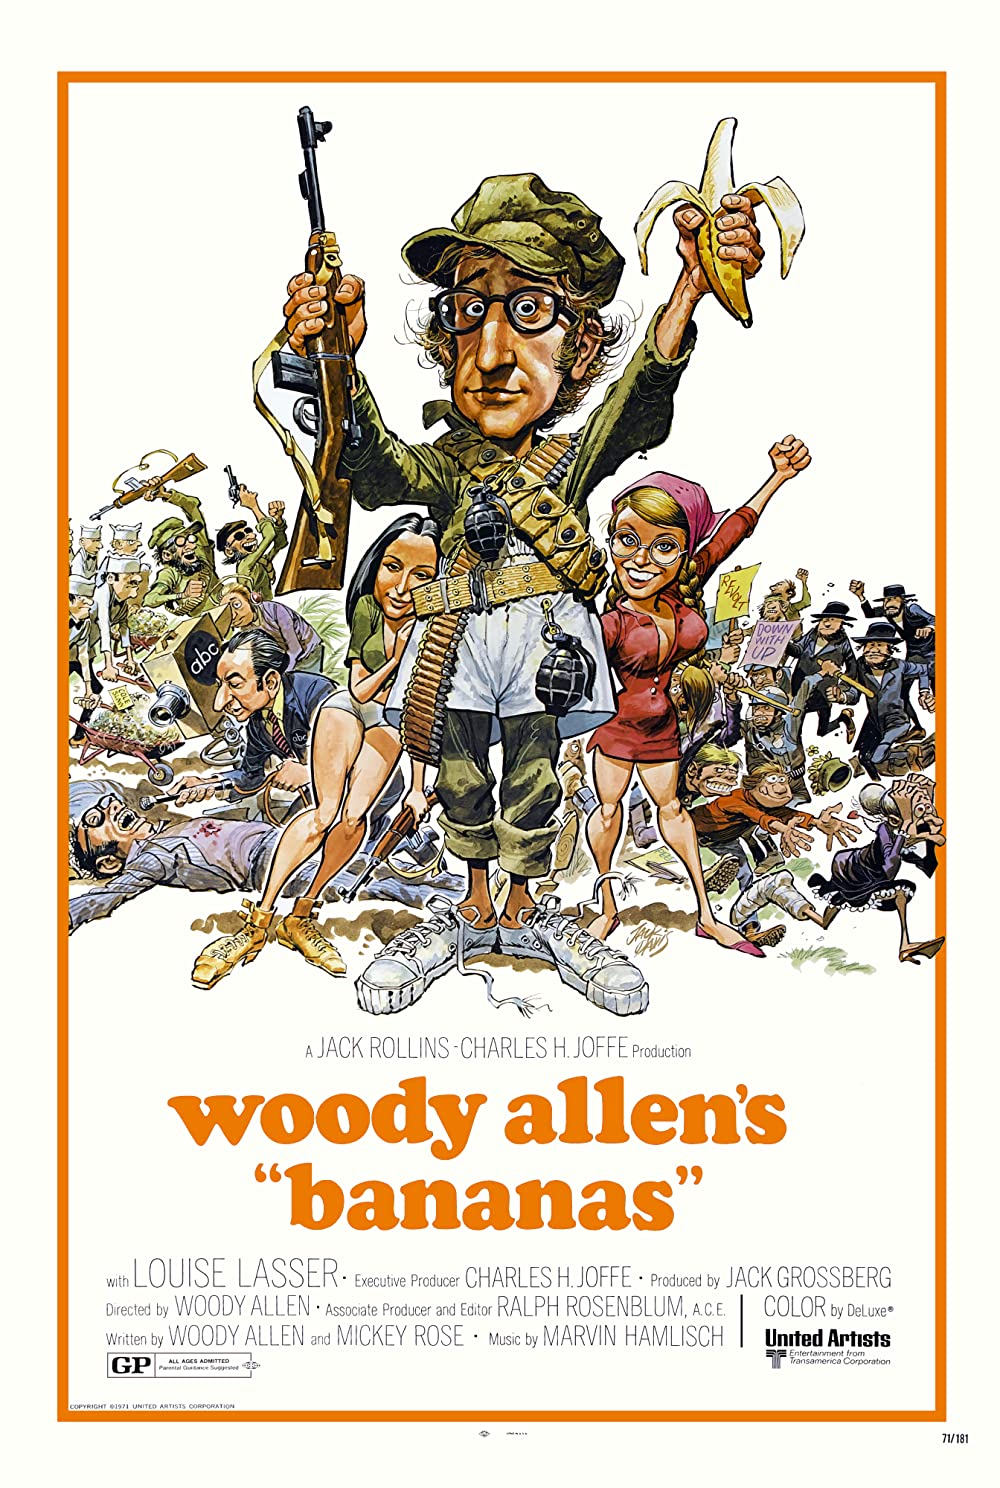 Filmbeschreibung zu Bananas